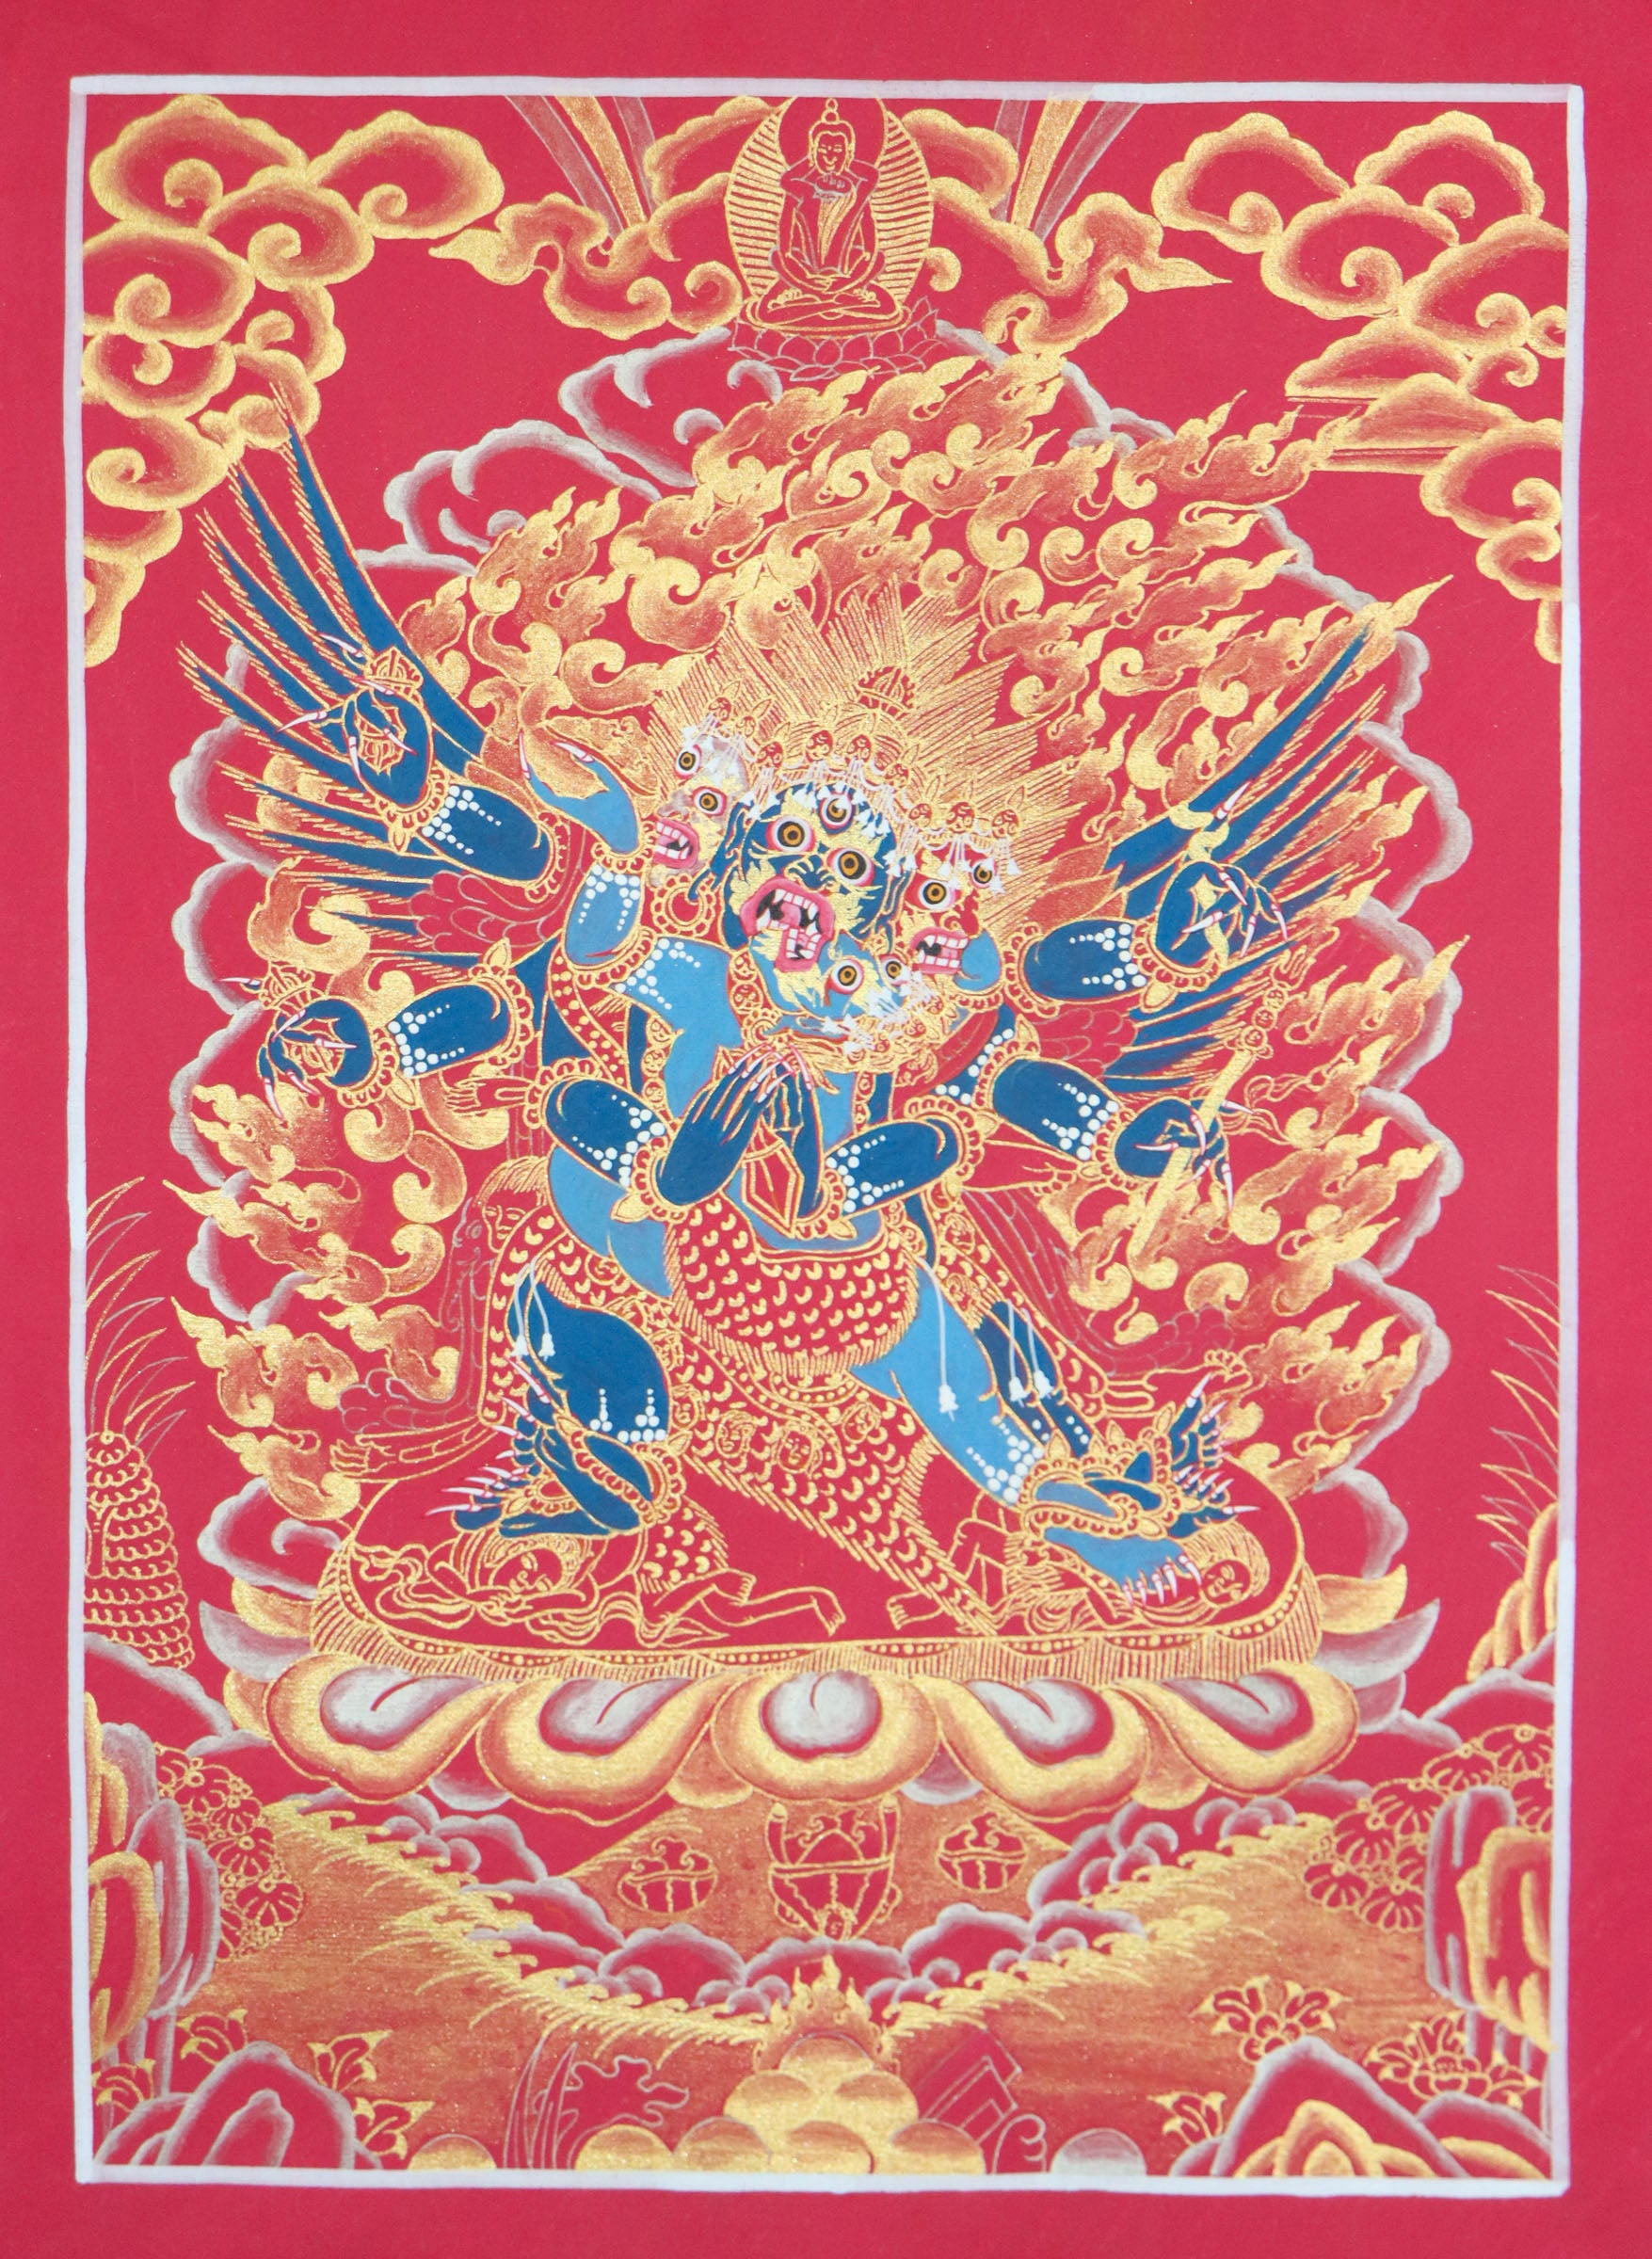 Vajrakilaya Thangka Painting be utilized as a tool for meditation and spiritual progress.